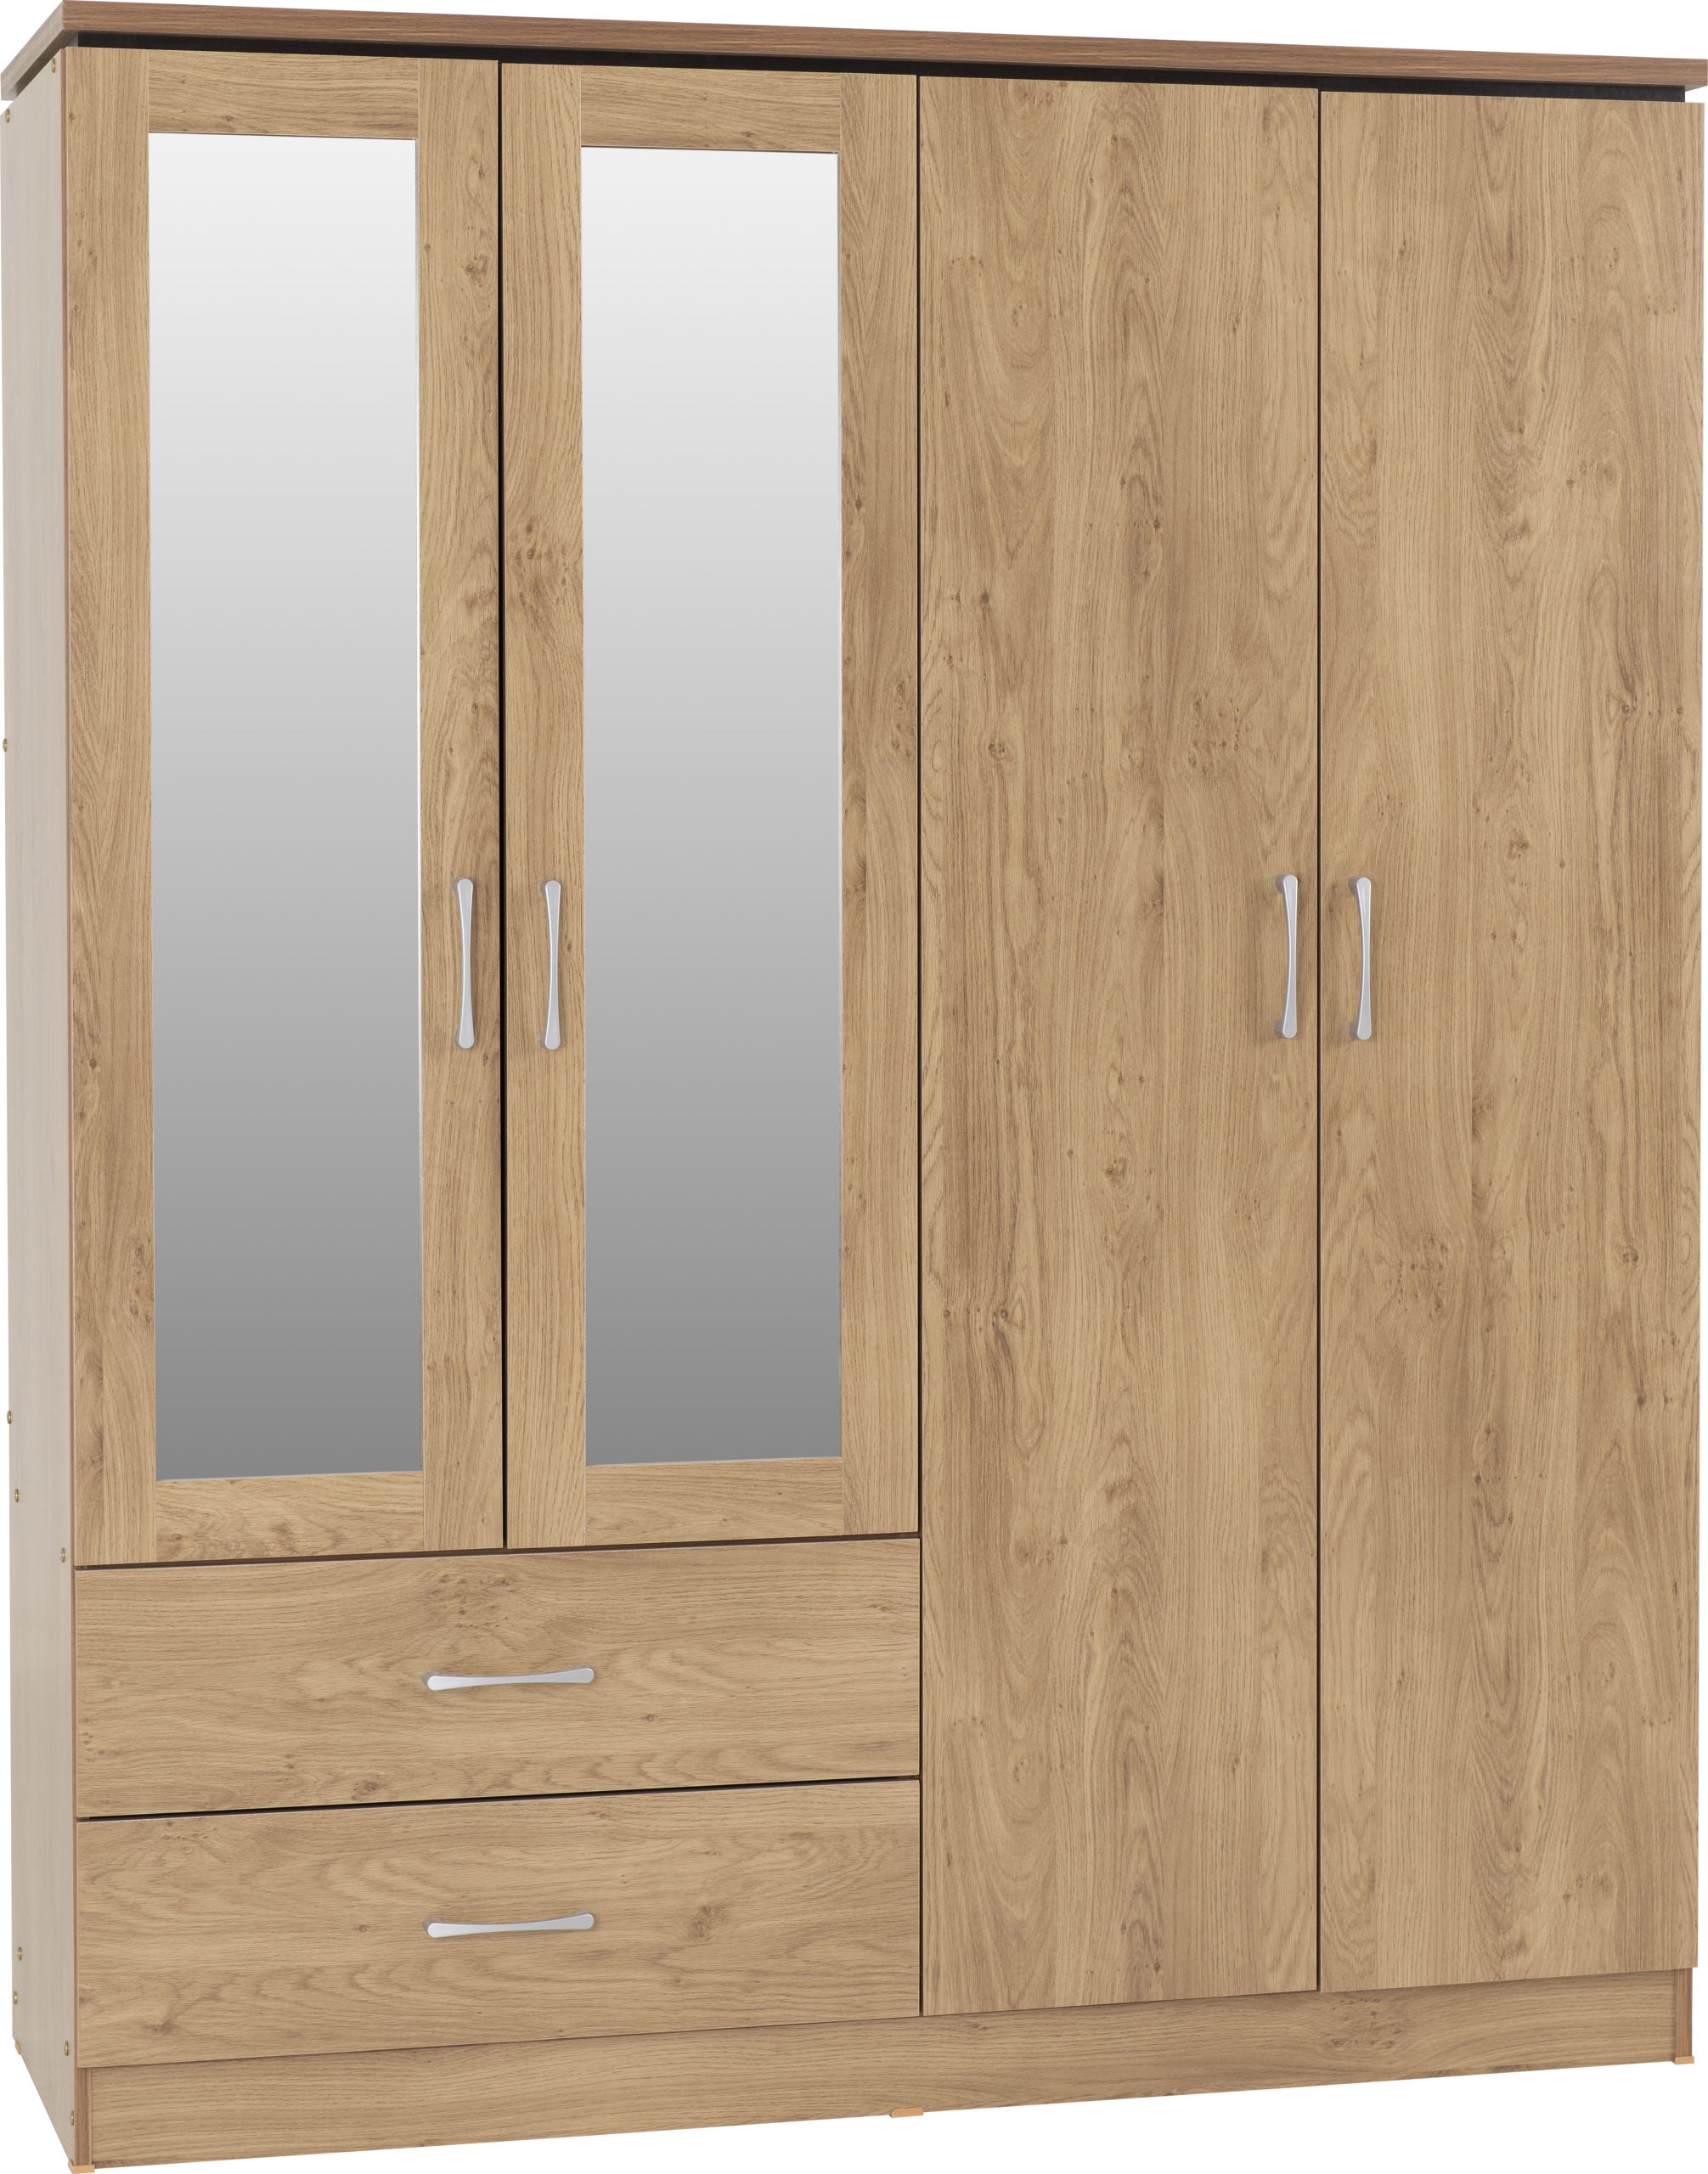 4 Door 2 Drawer Mirrored Wardrobe Oak Effect Veneer with Walnut Trim